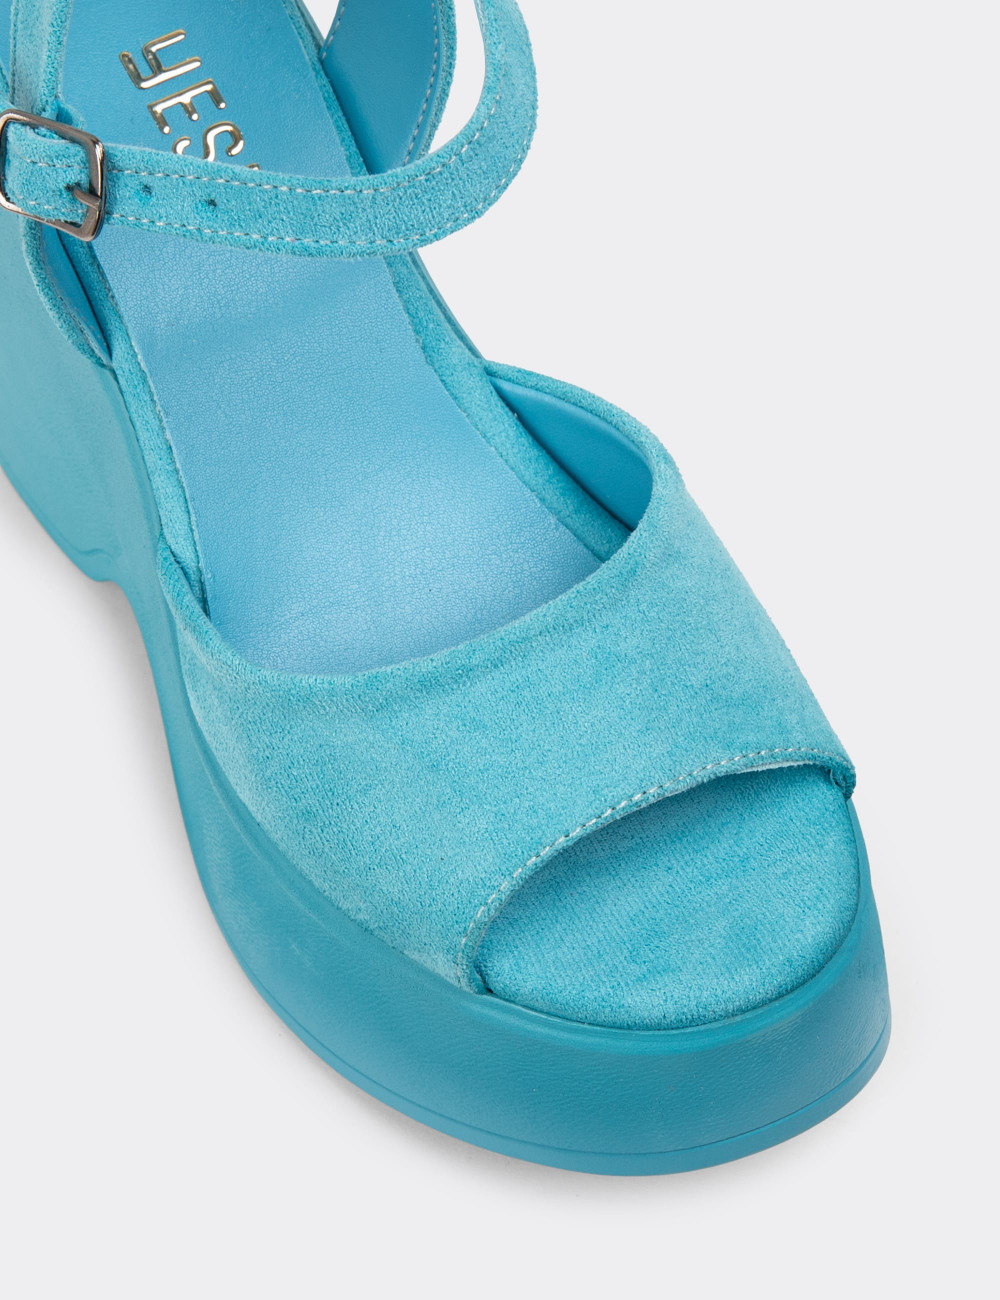 Mavi Süet Platform Topuk Kadın Sandalet - DLG10ZMVIC01